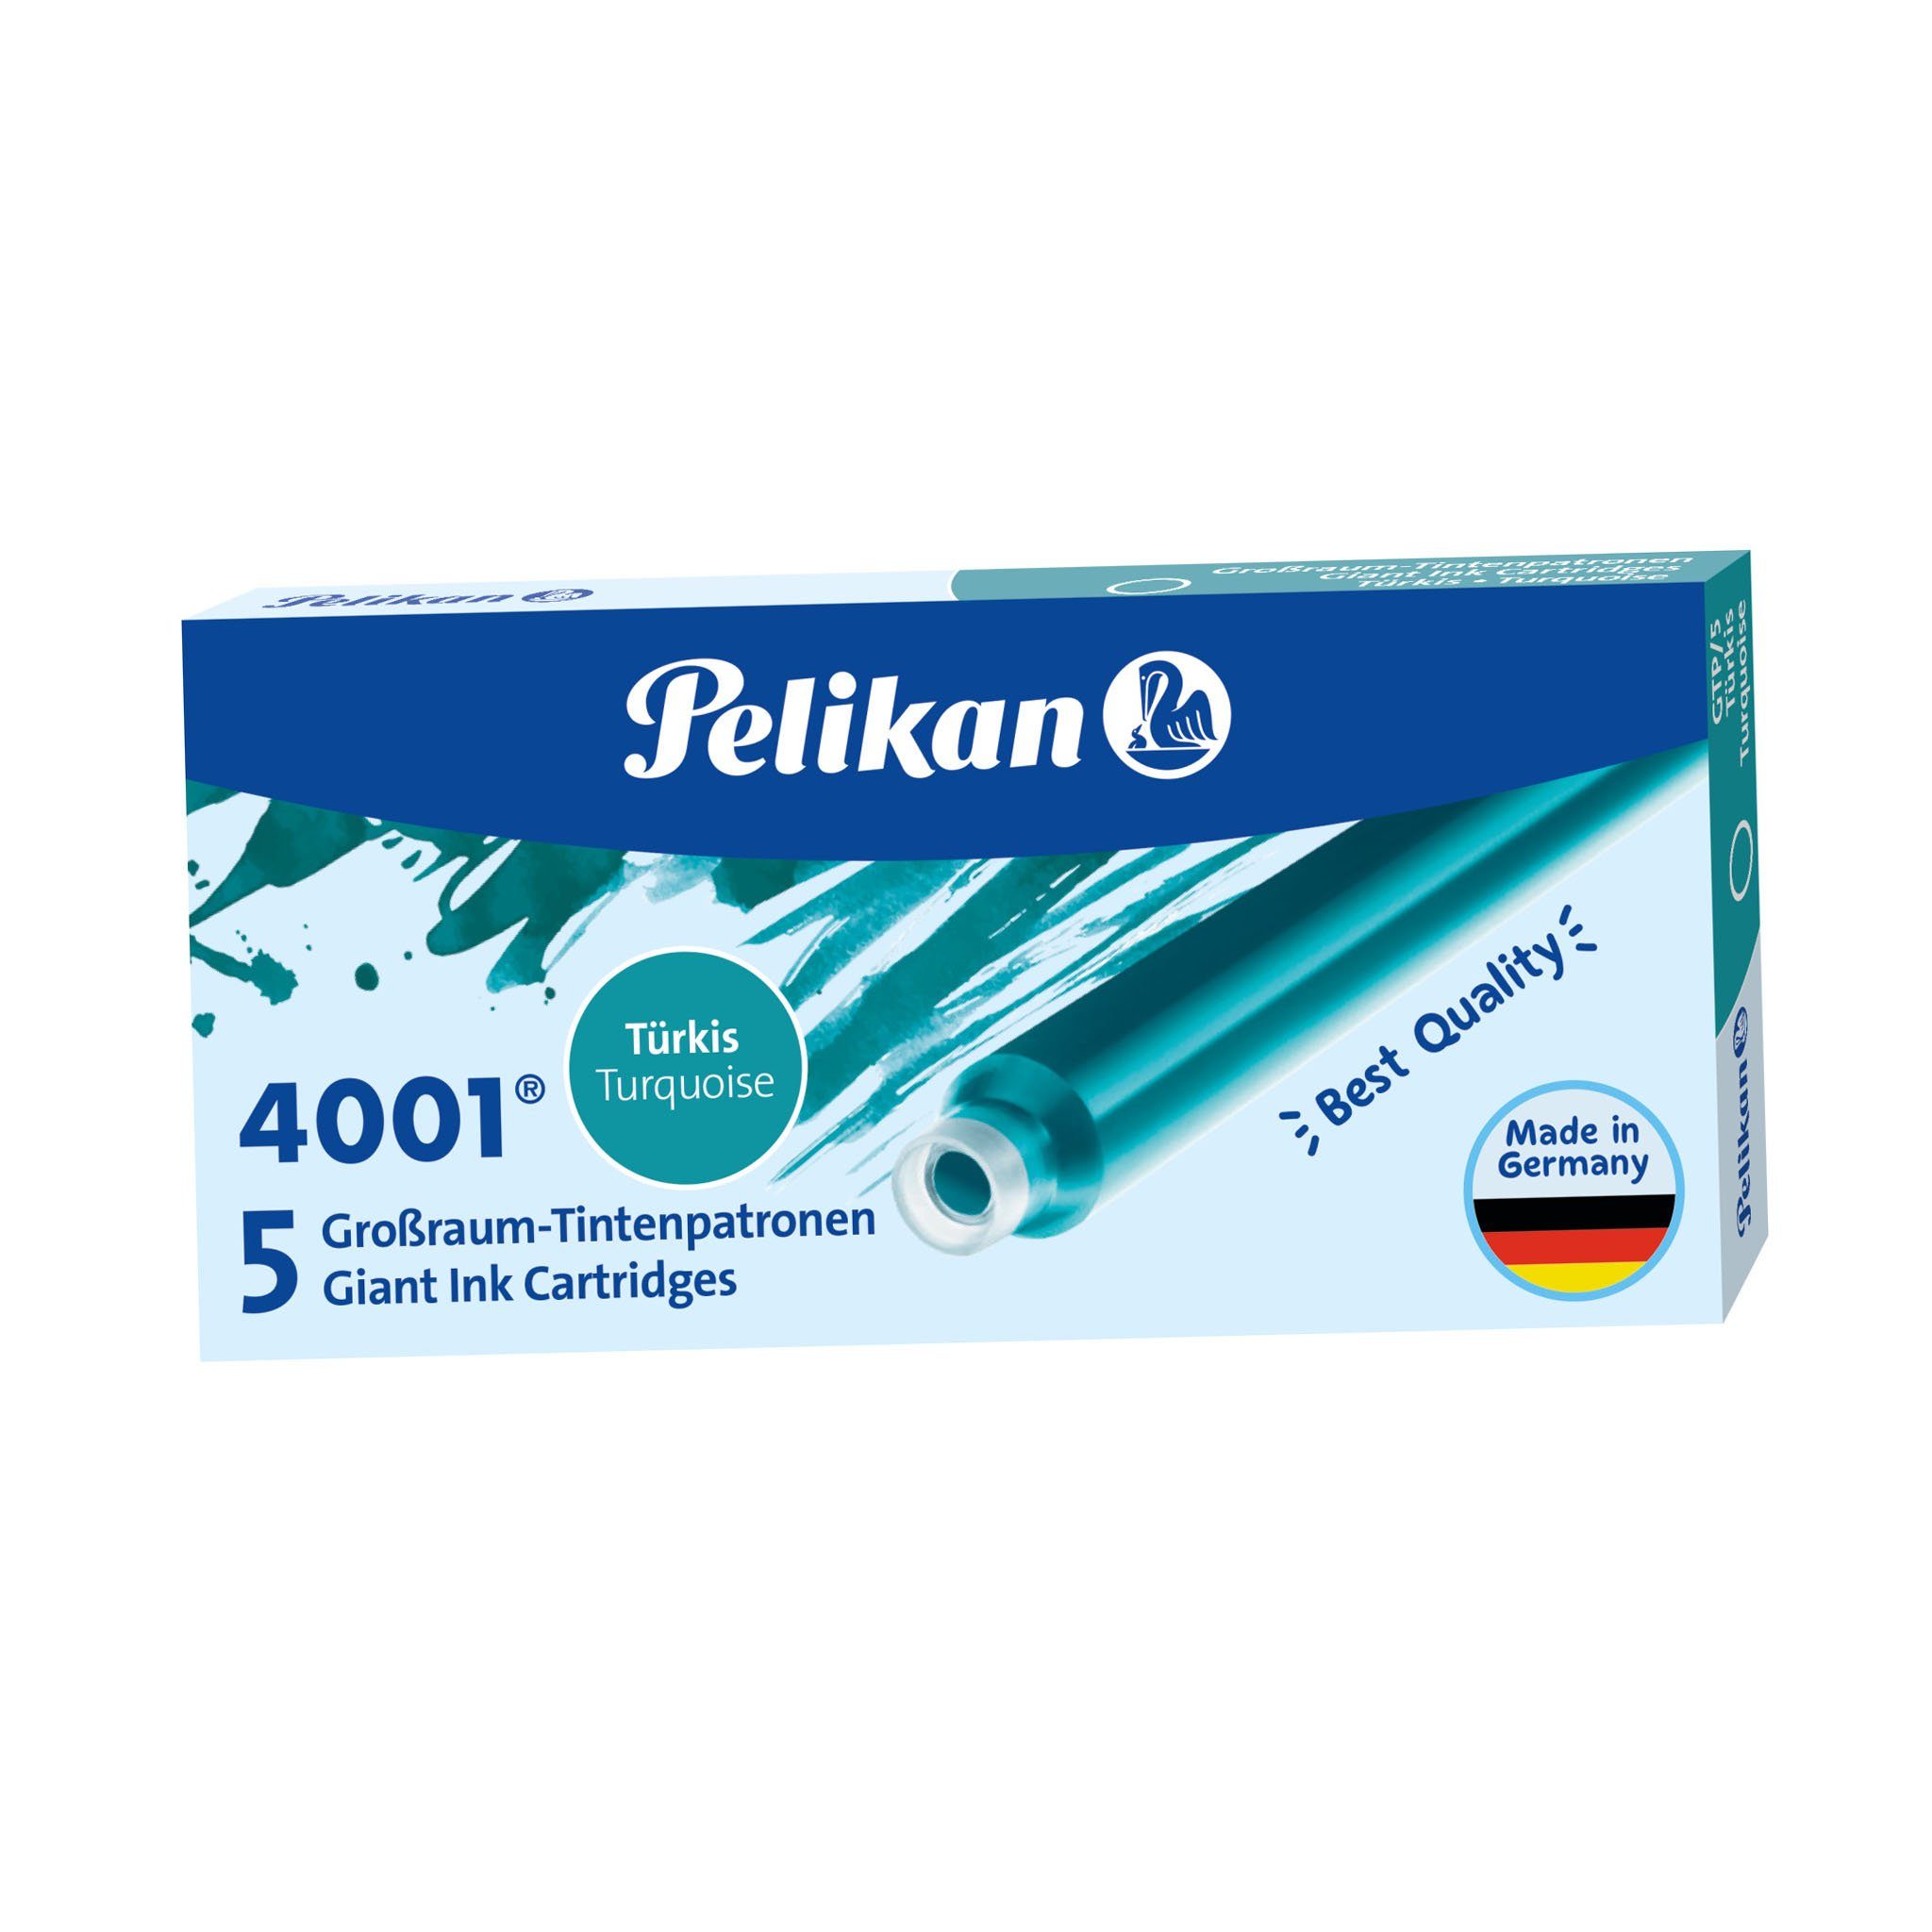 Pelikan Füllfederhalter Pelikan Großraum-Tintenpatronen 4001 GTP/5, türkis | Füllfederhalter